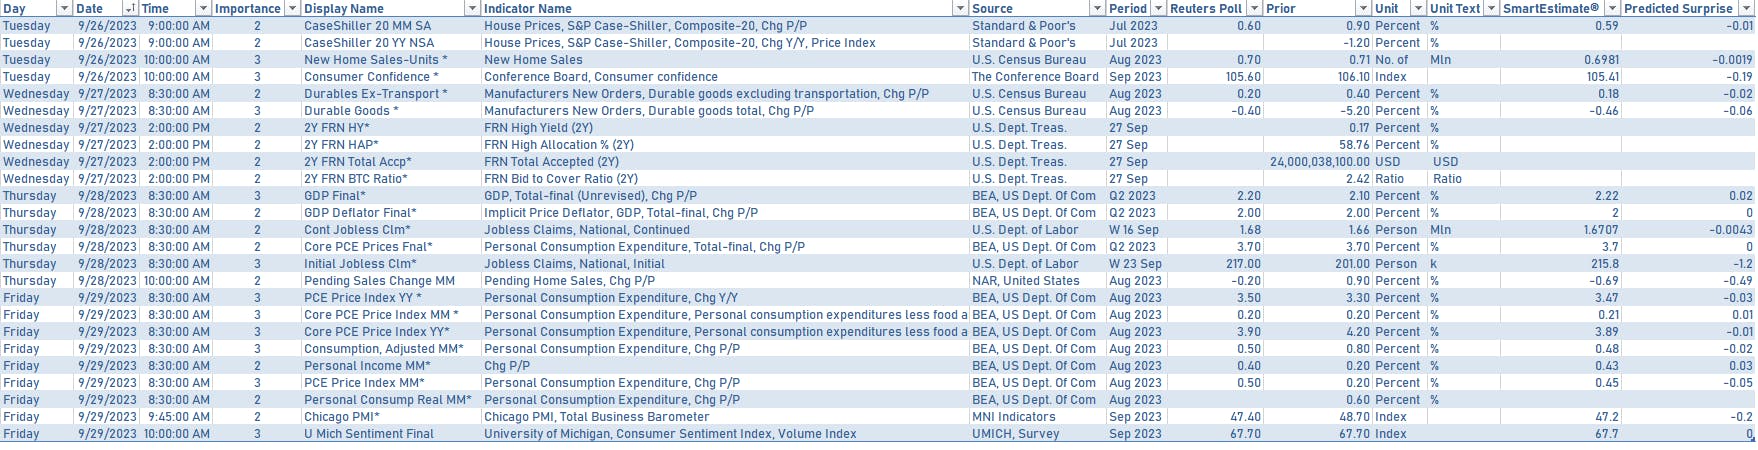 US Econ data next week | Sources: phipost.com, Refinitiv data